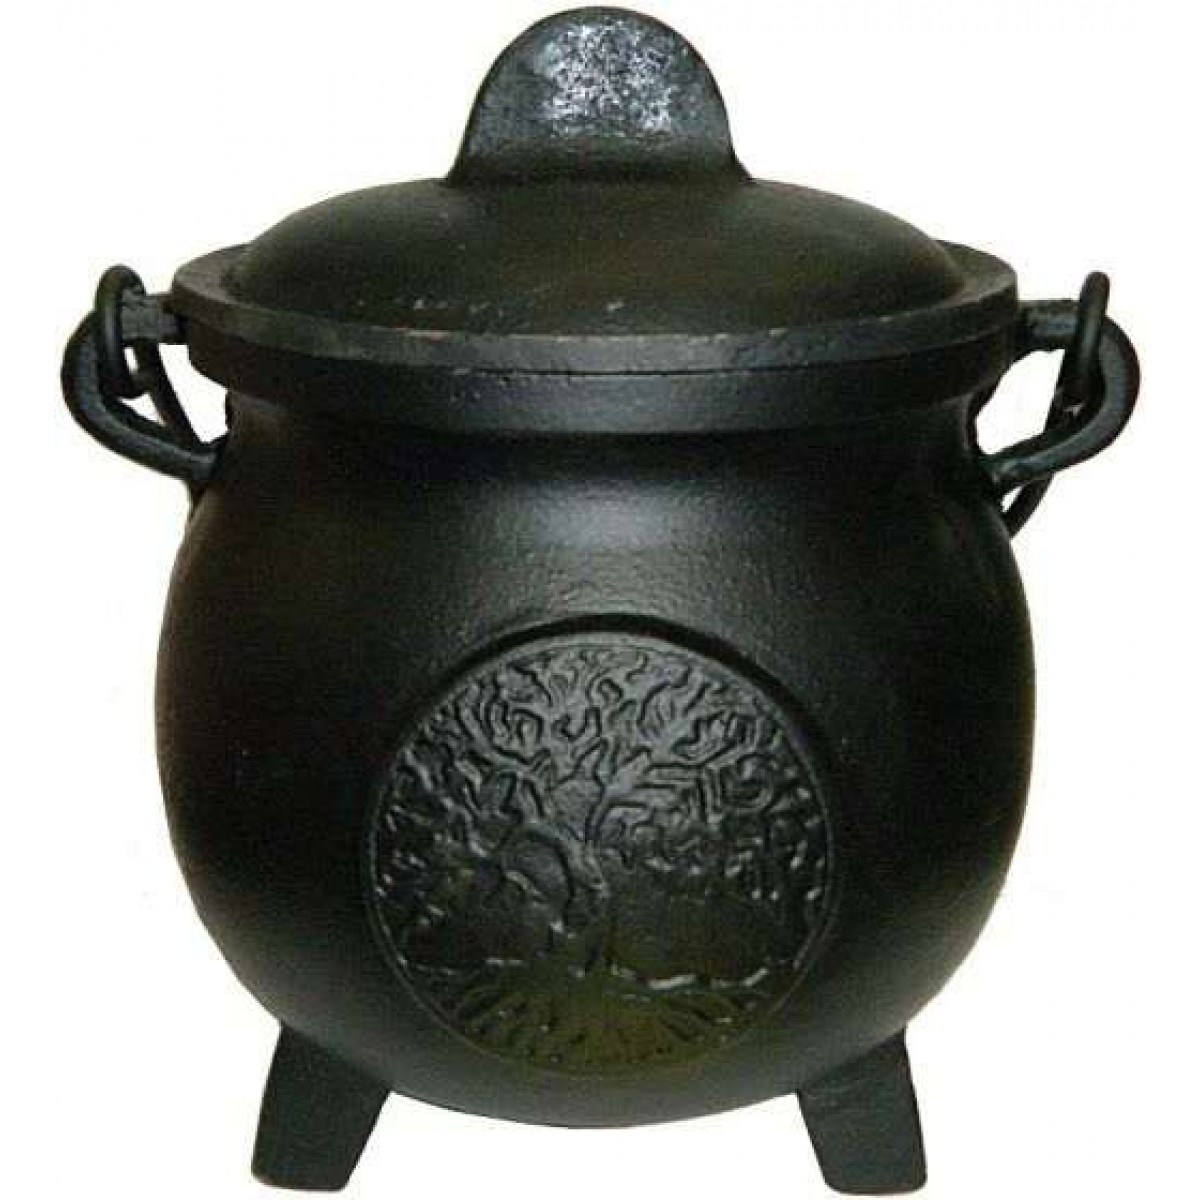 Cast Iron Cauldron with Handle - Incense Burner, Candle Holder, Smudge Pot